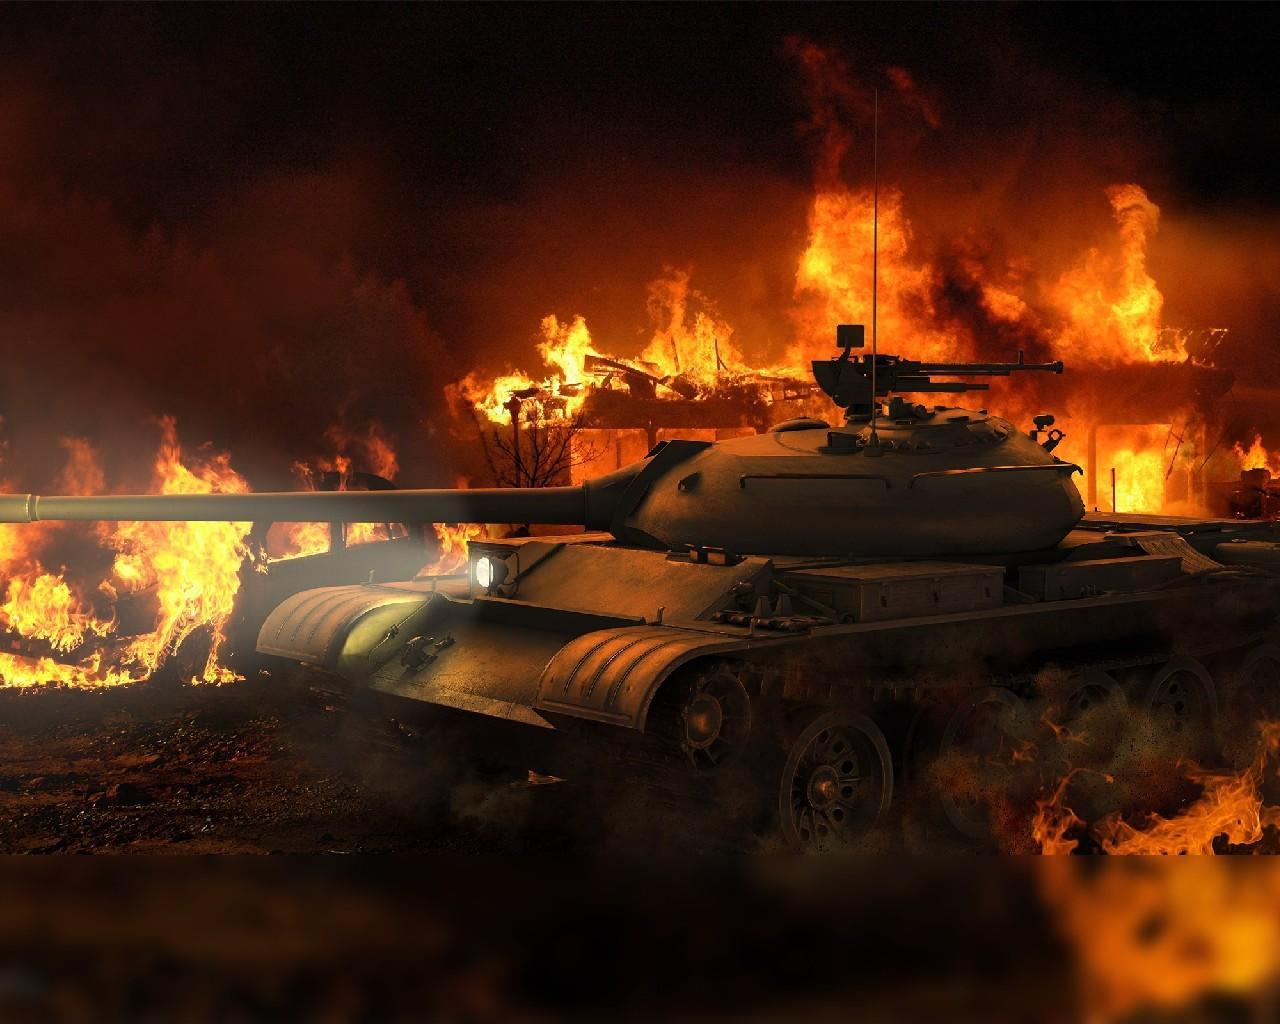 Wot 54. Т-54 World of Tanks. Т54 танк World of Tanks Blitz. Т-54 средний танк WOT Blitz. Т54 танк на Украине.